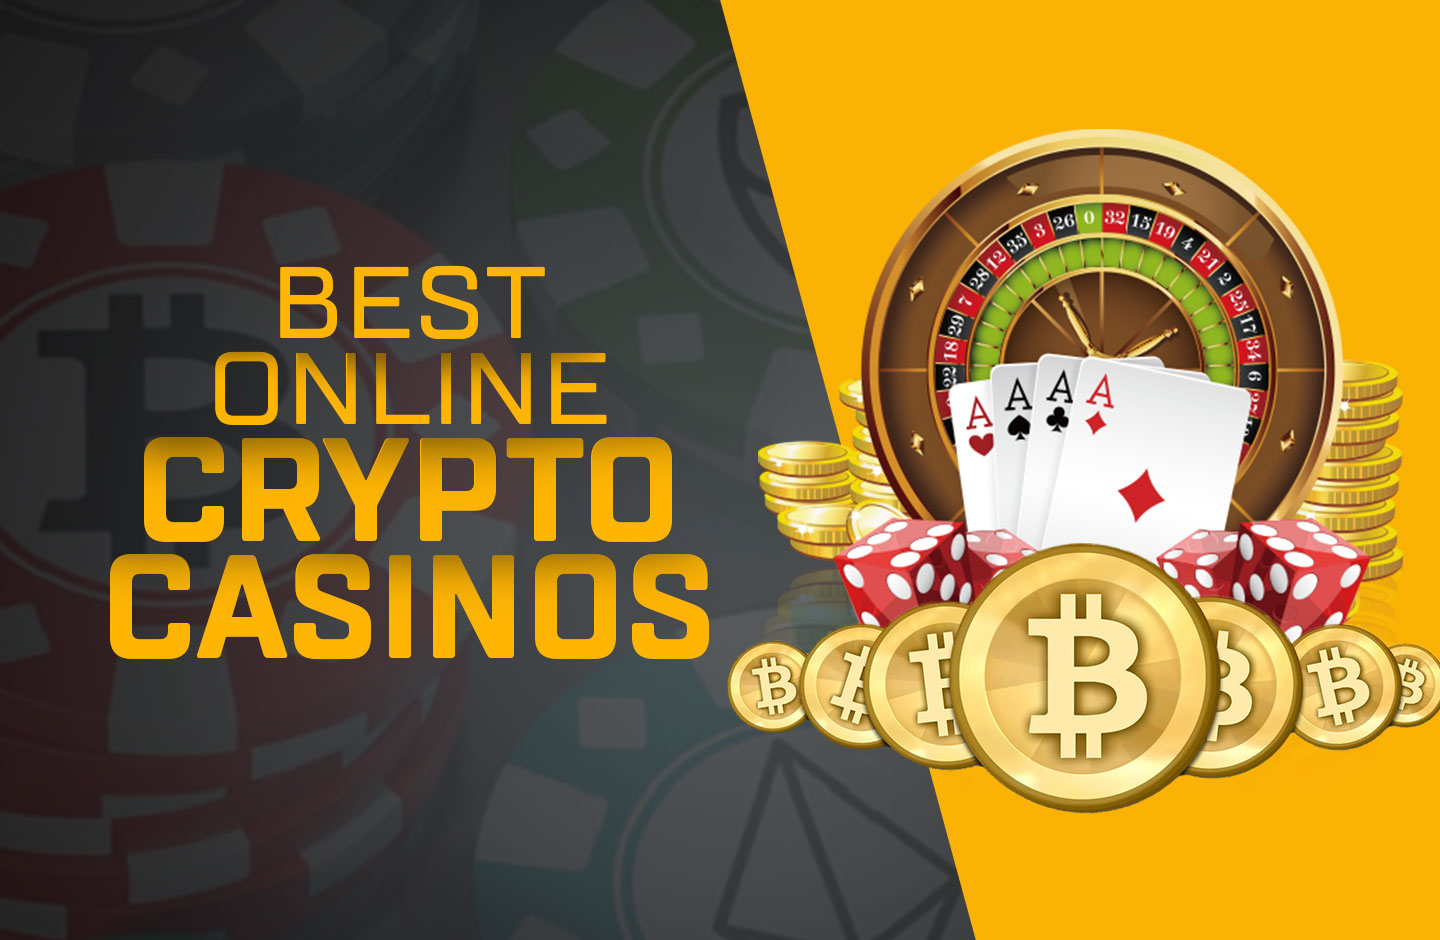 How To Start Bitcoin Casino Bonus Codes With Less Than $110